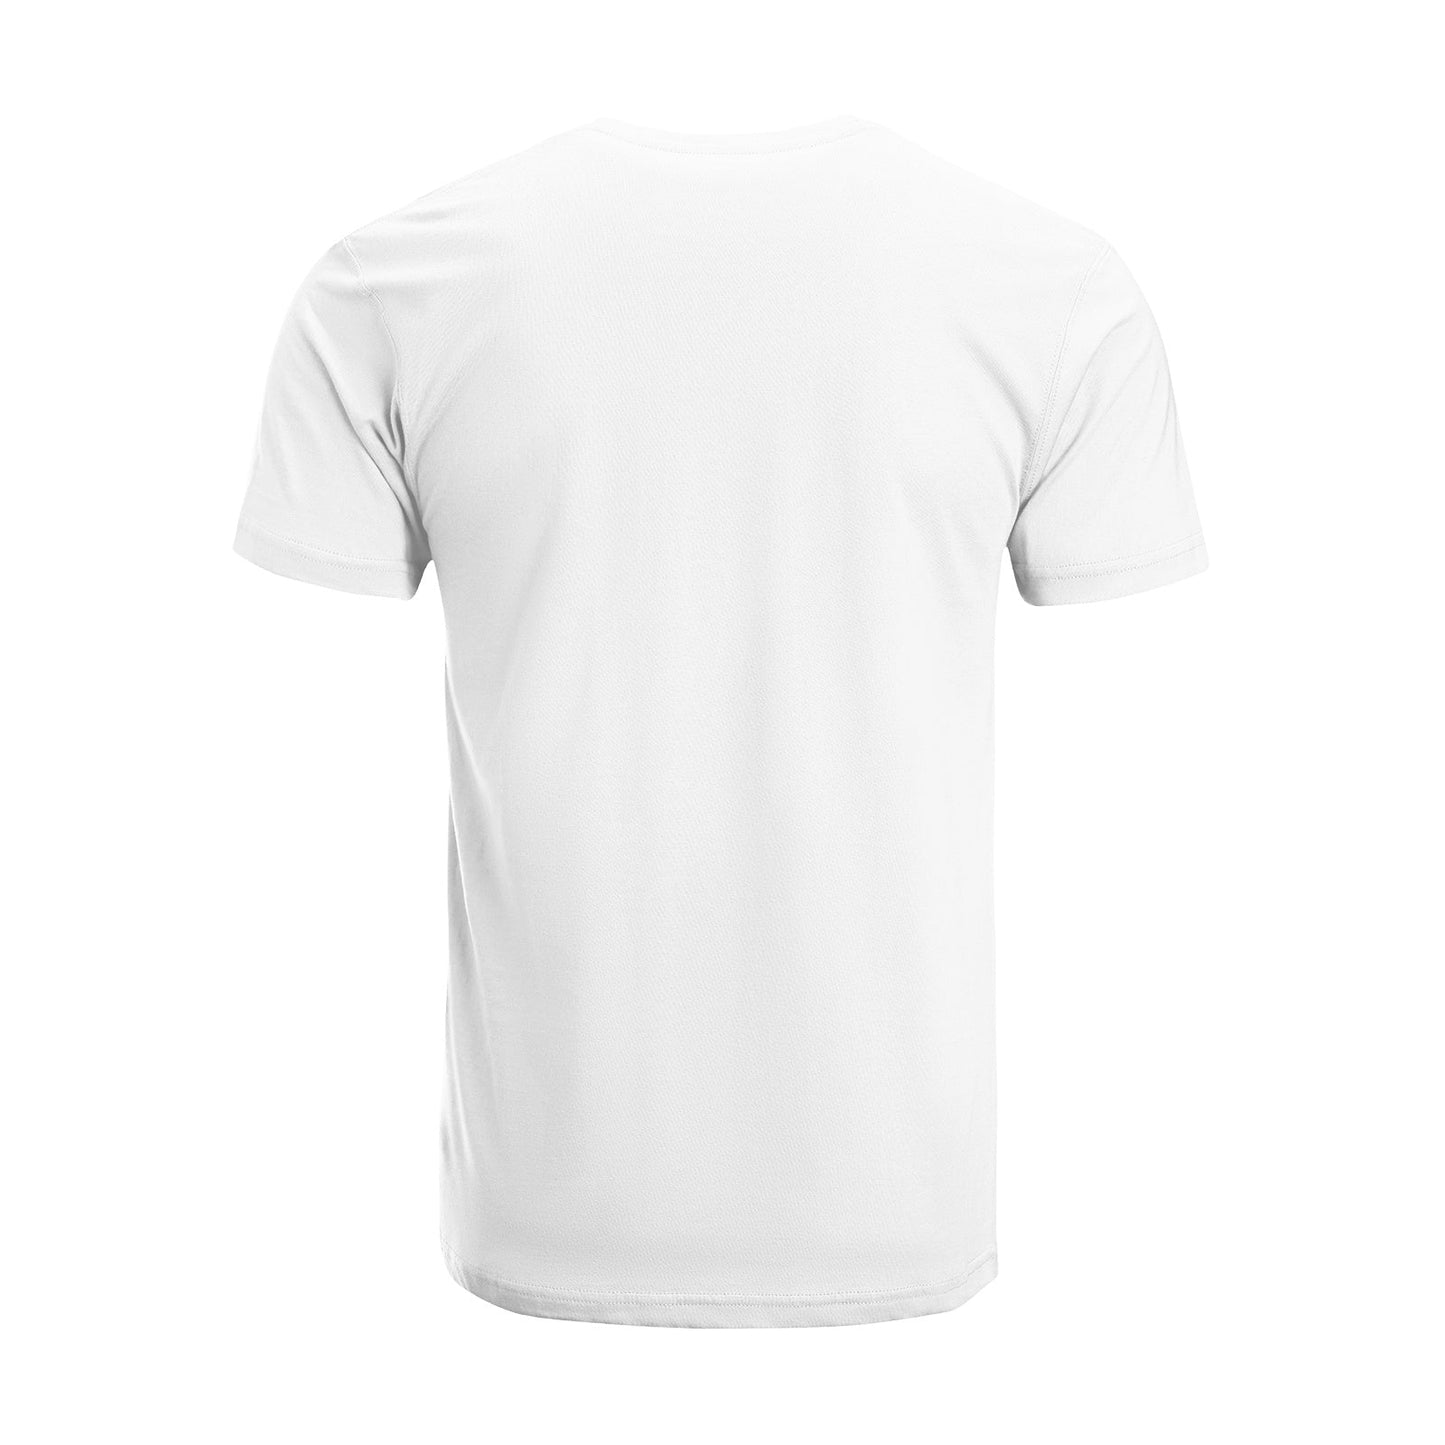 Unisex Short Sleeve Crew Neck Cotton Jersey T-Shirt USA 05